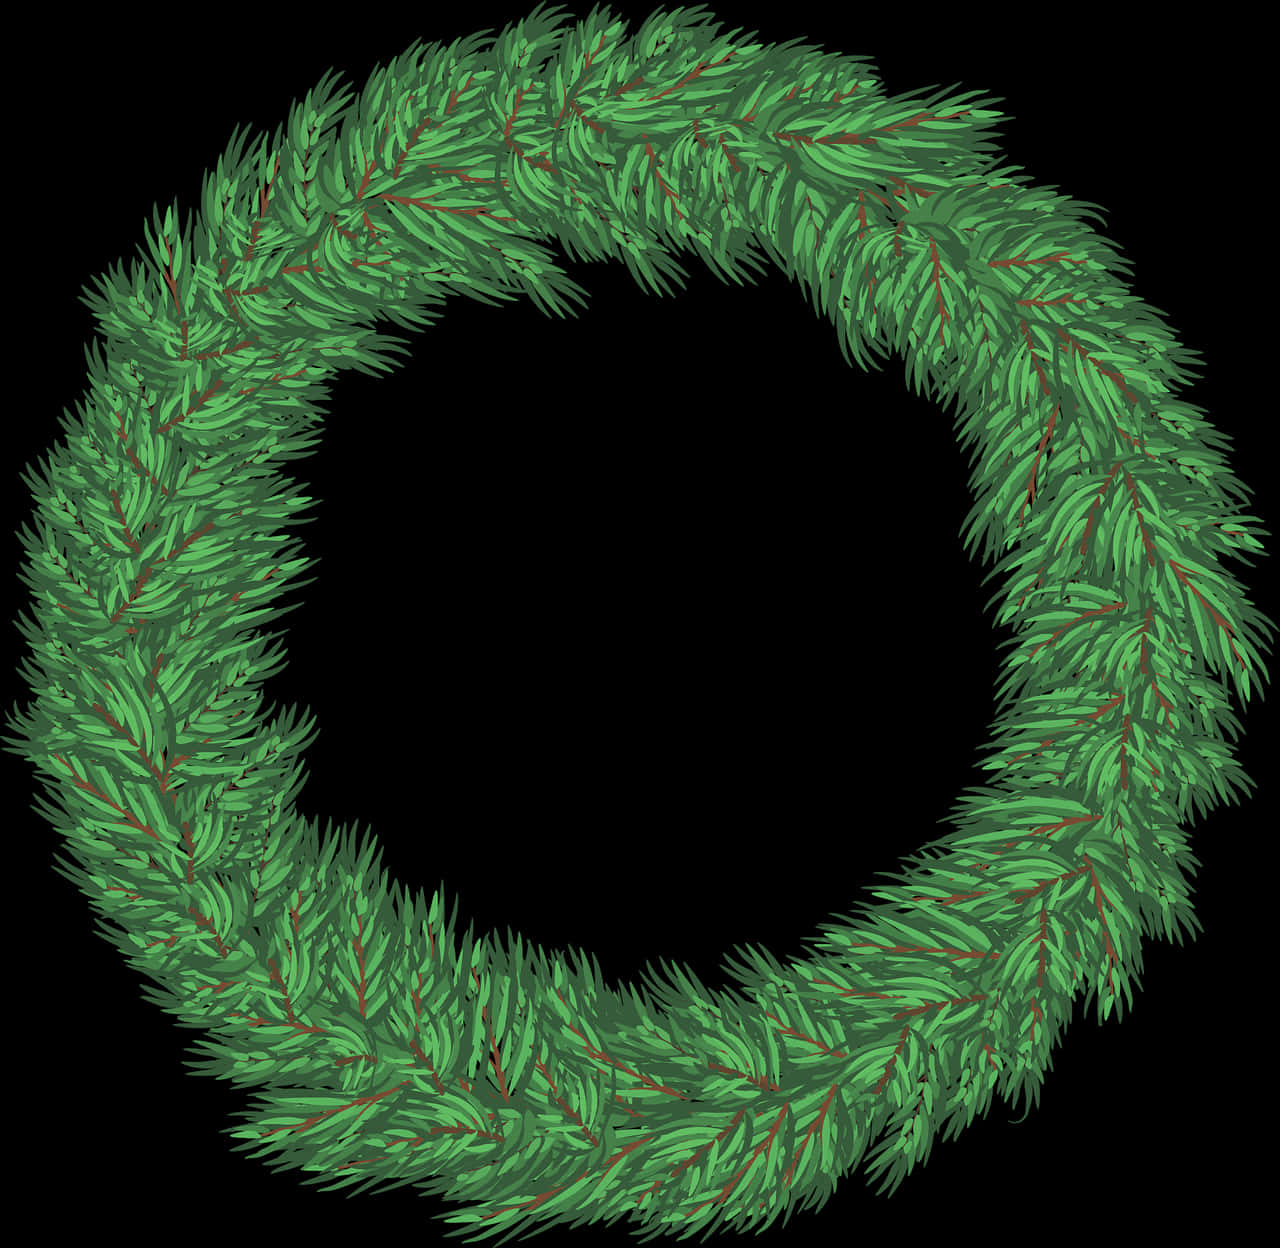 Green Christmas Wreath Graphic